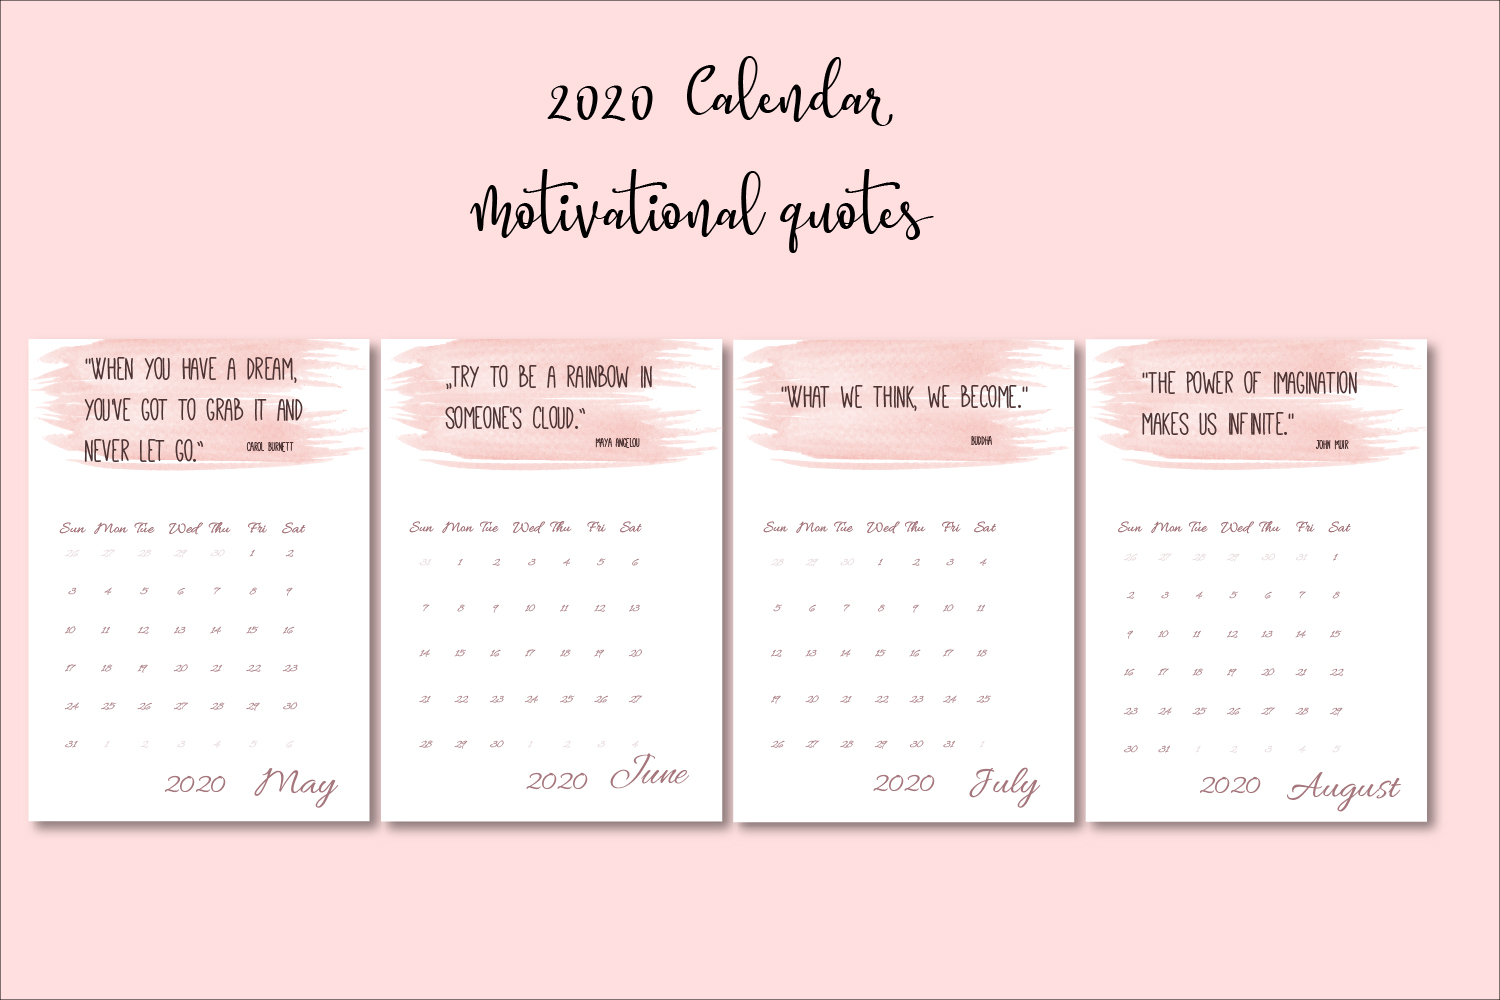 2020 Calendar, Motivational calendar, Quotes calendar 2020